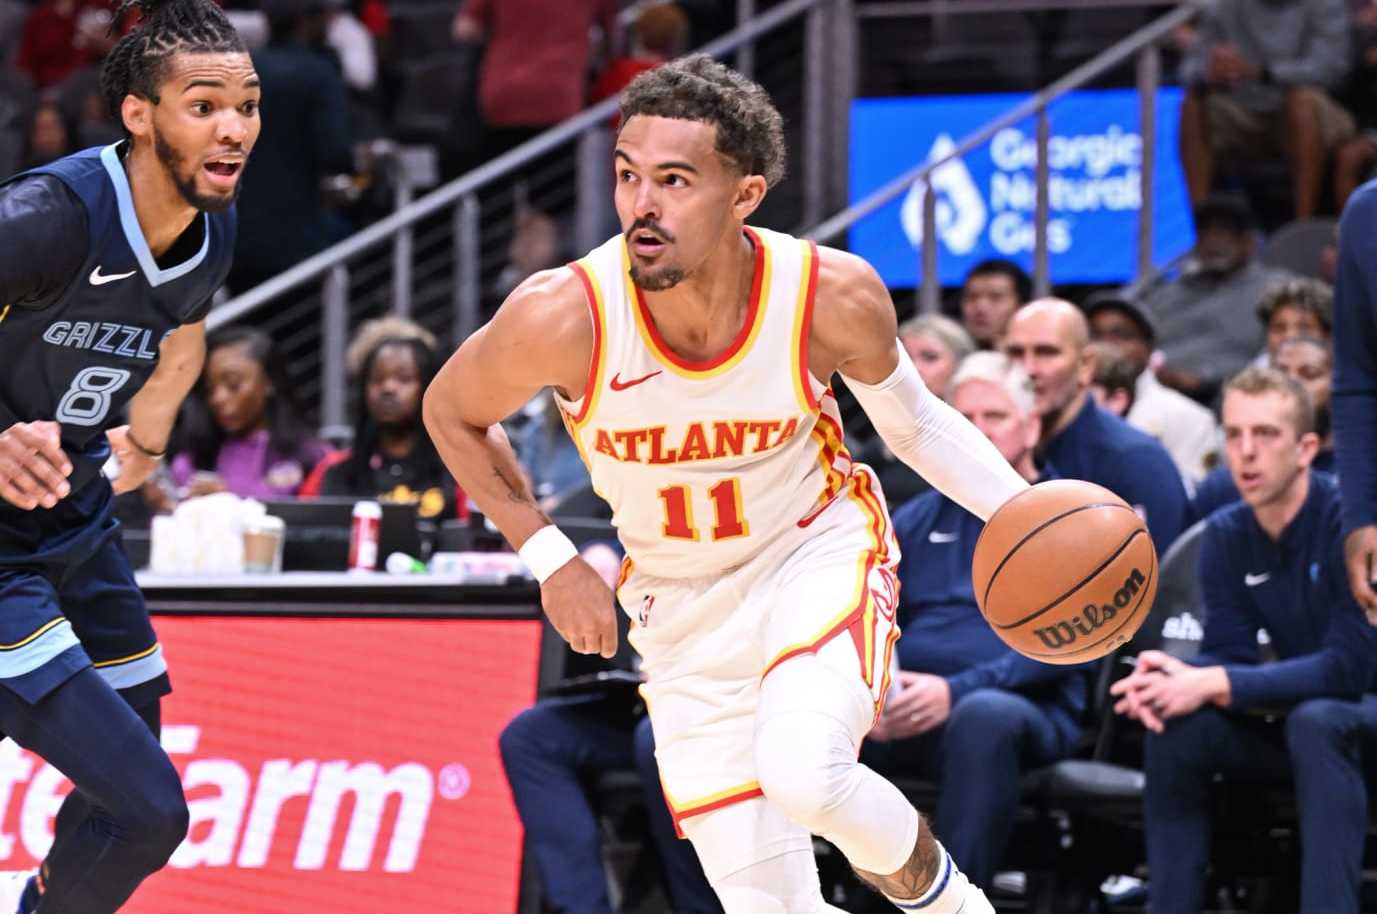 Preview: Nuggets look to retake series lead against Heat - Denver Stiffs